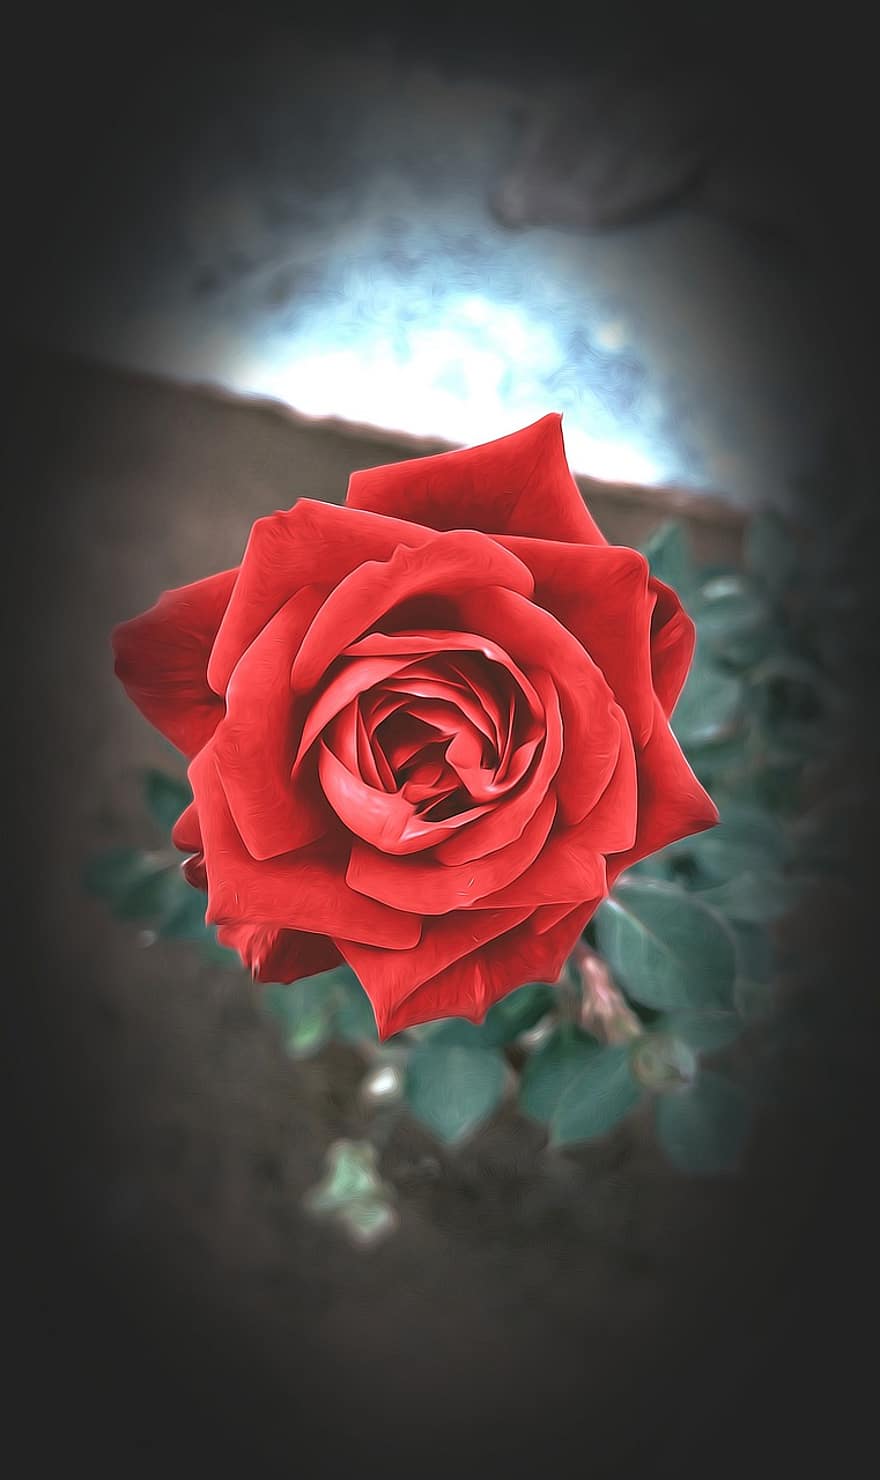 Rosa, flor, planta, Rosa roja, flor roja, pétalos, floración, pétalo, de cerca, romance, hoja